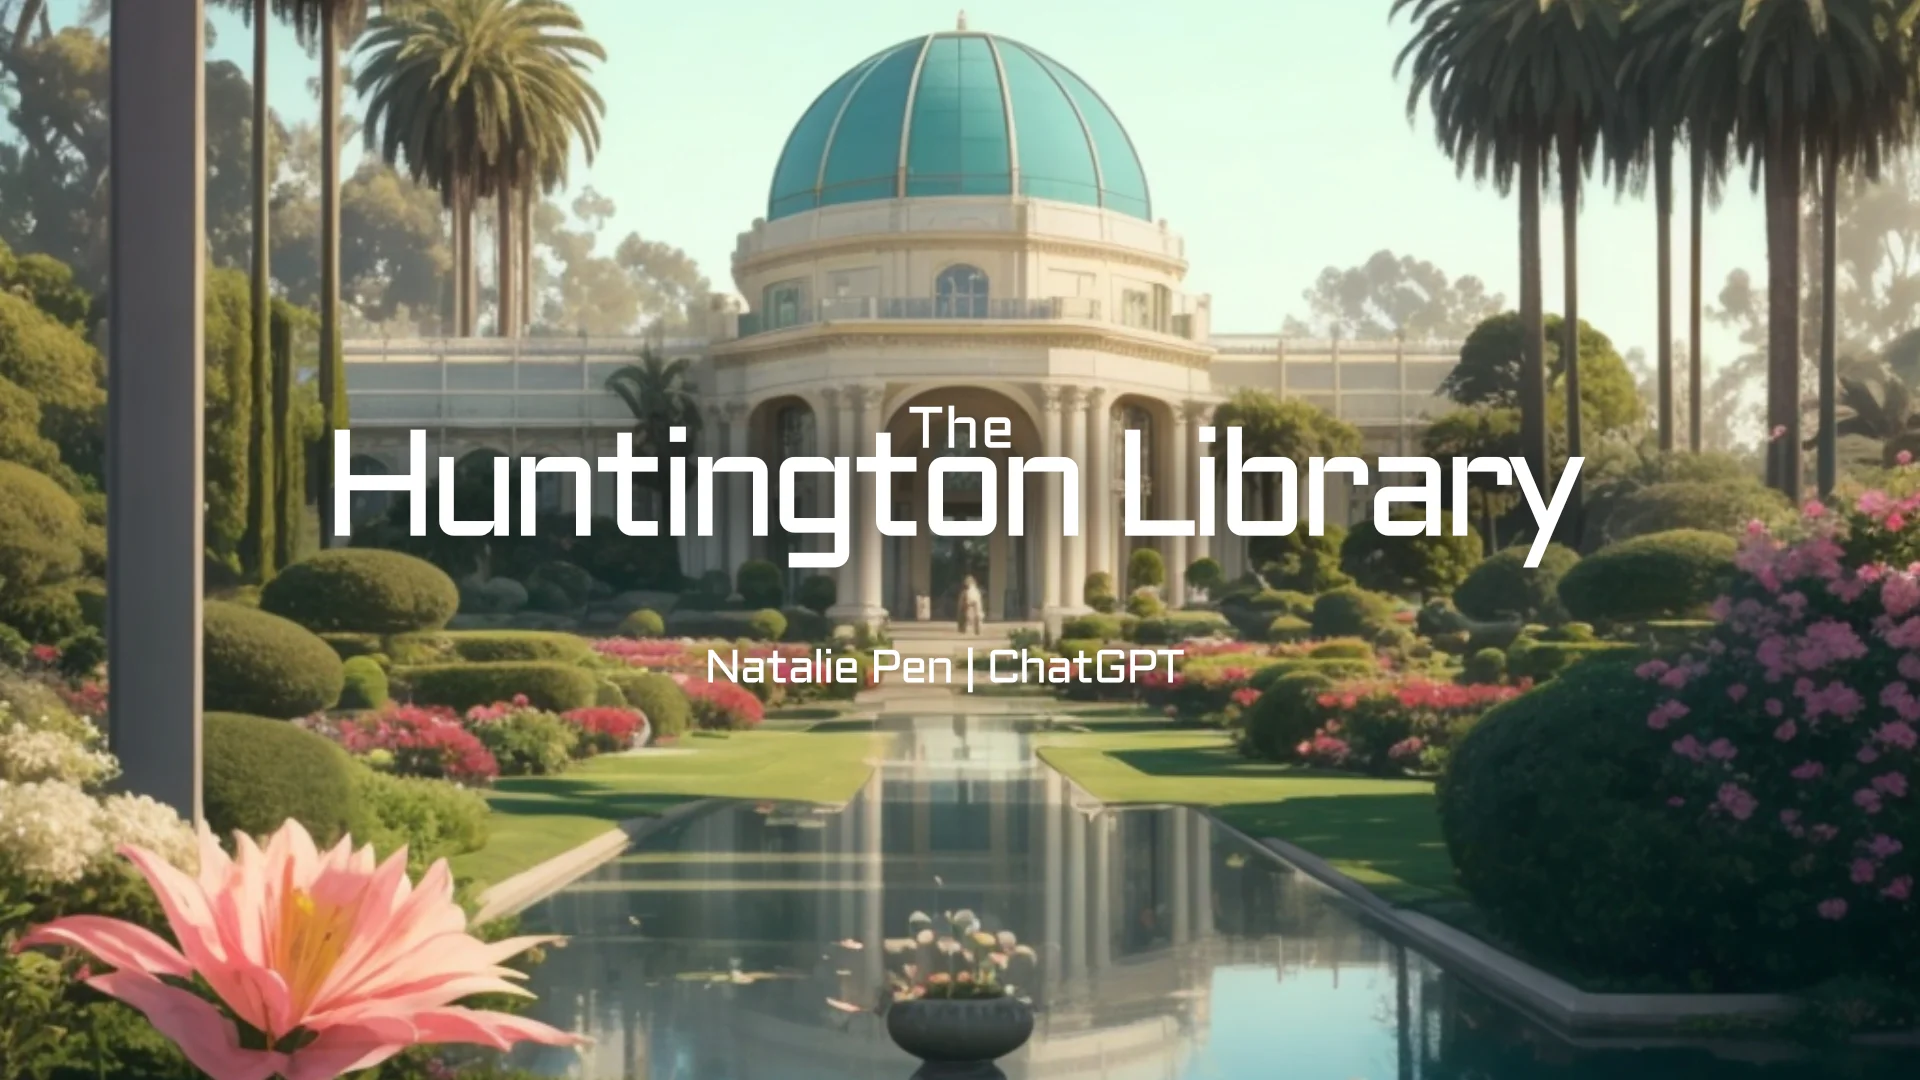 The Huntington Library - Natalie Pen